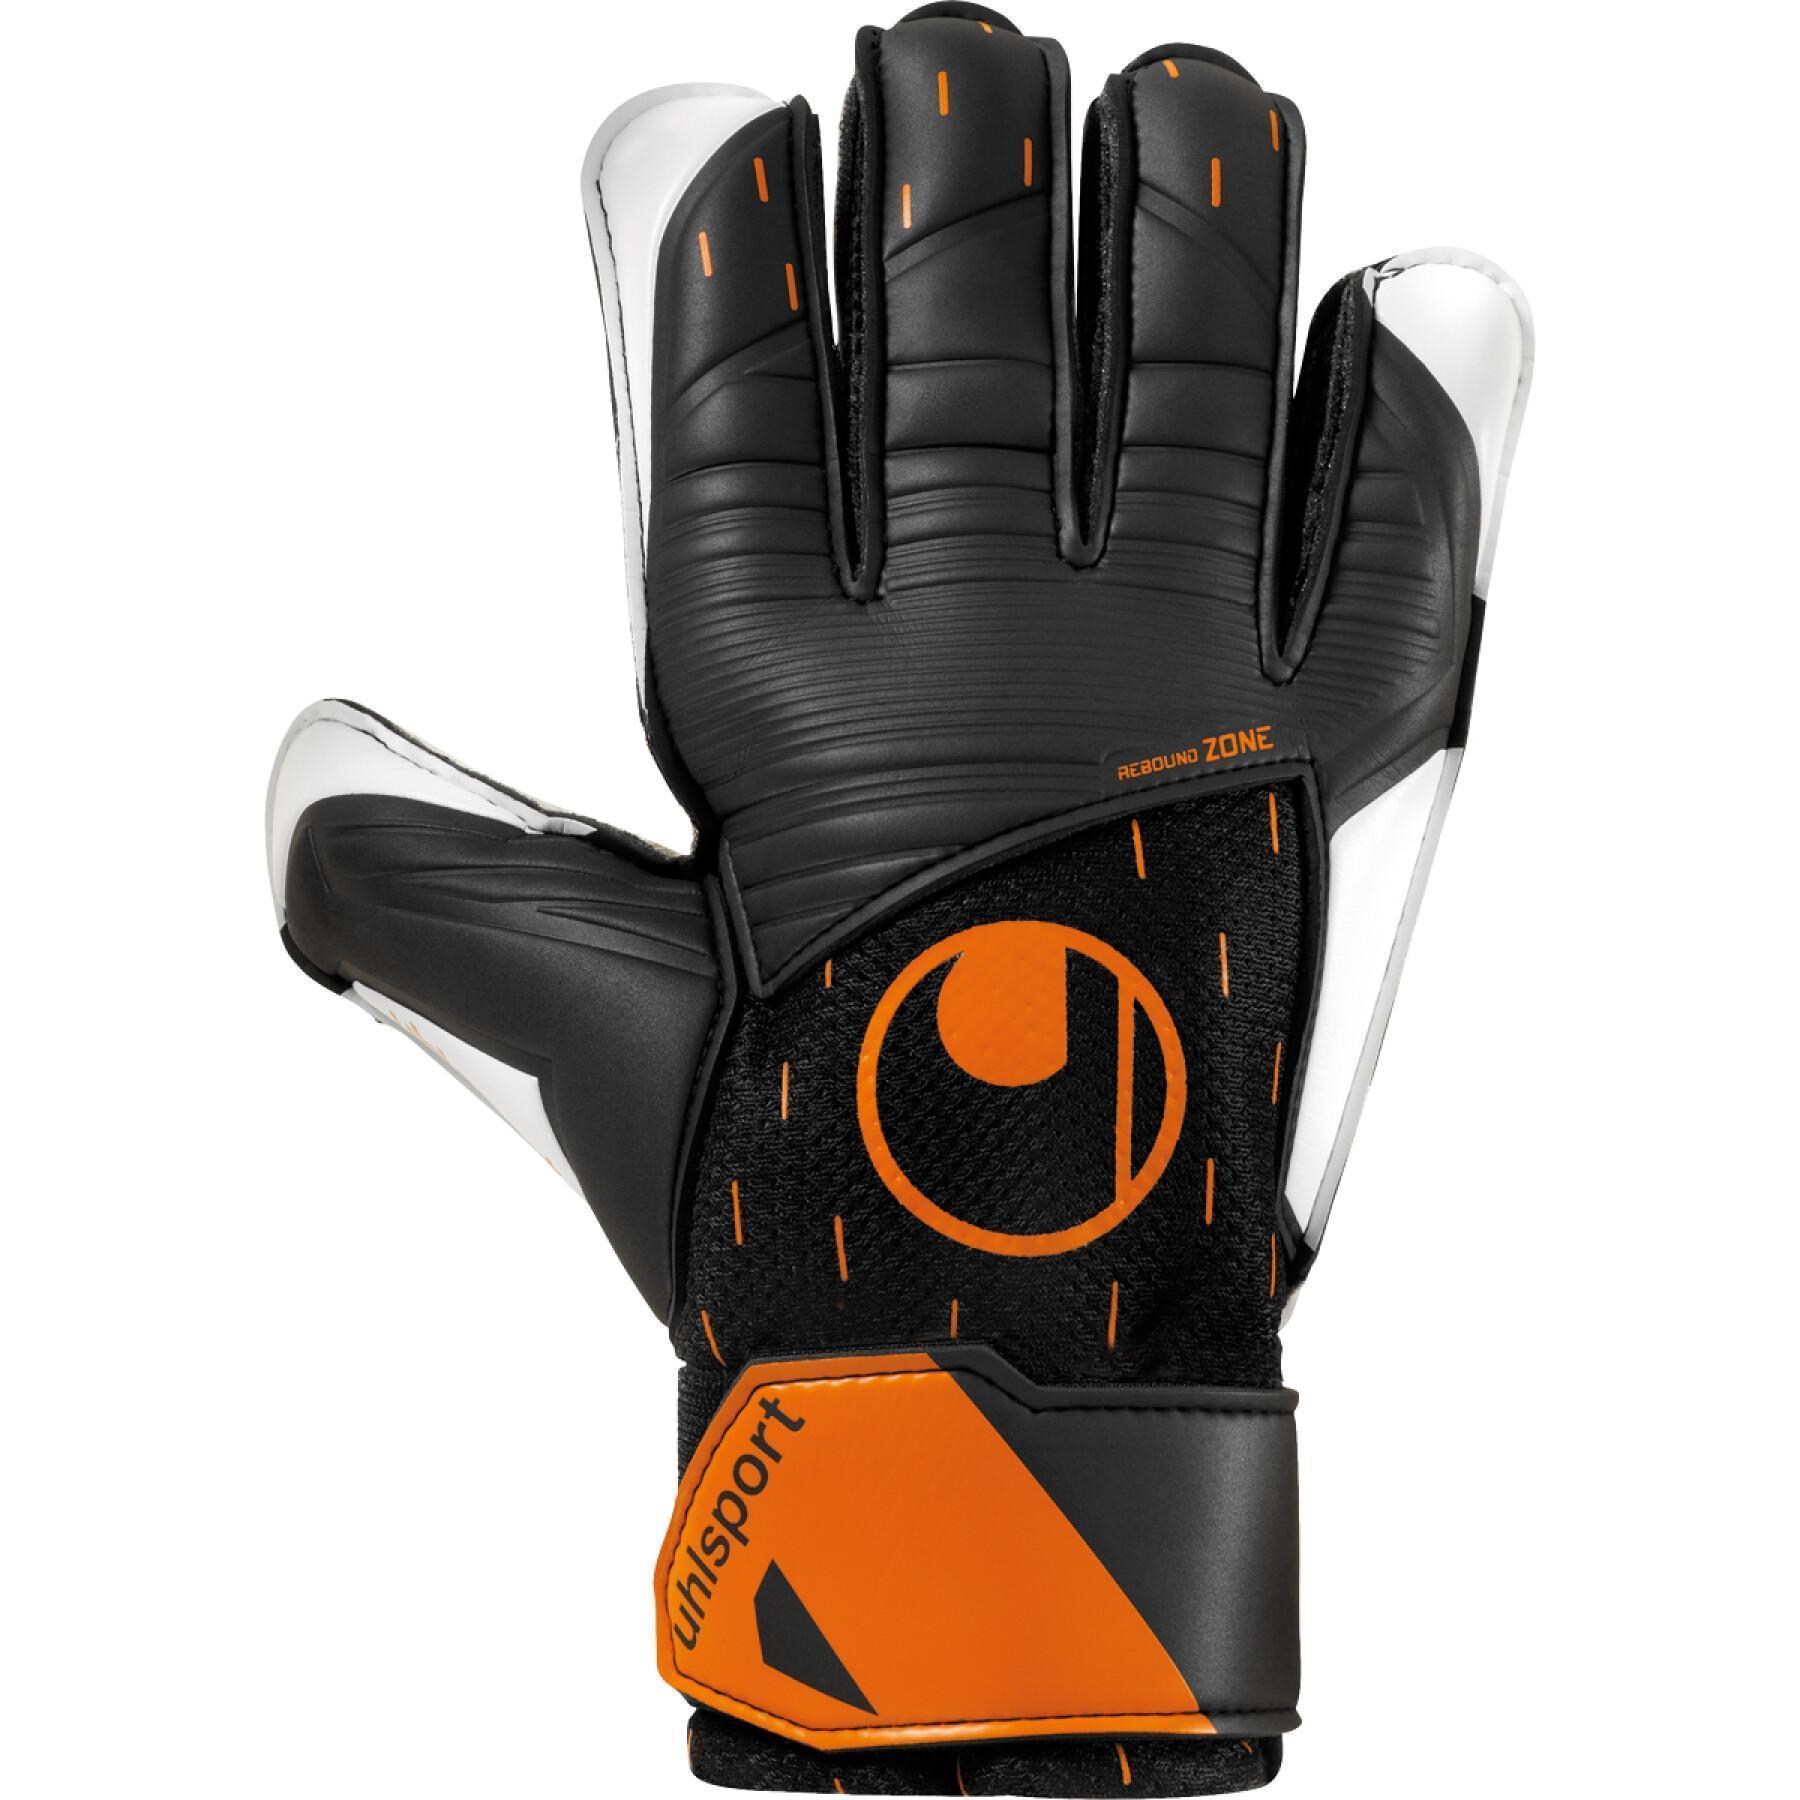 Goalkeeper gloves Uhlsport Speed contact Starter soft